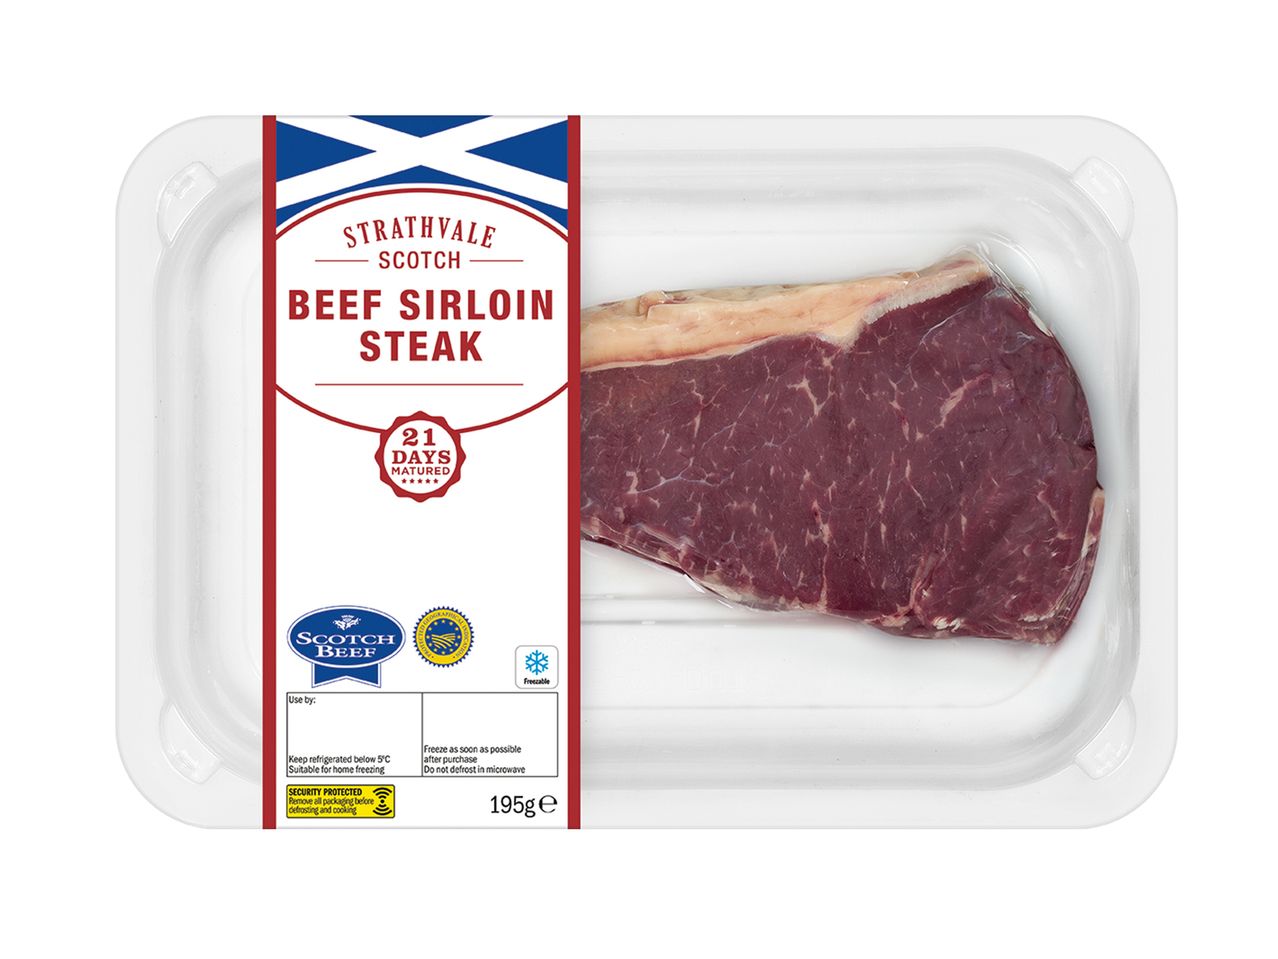 Go to full screen view: Strathvale Scotch Beef Sirloin Steak - Image 1